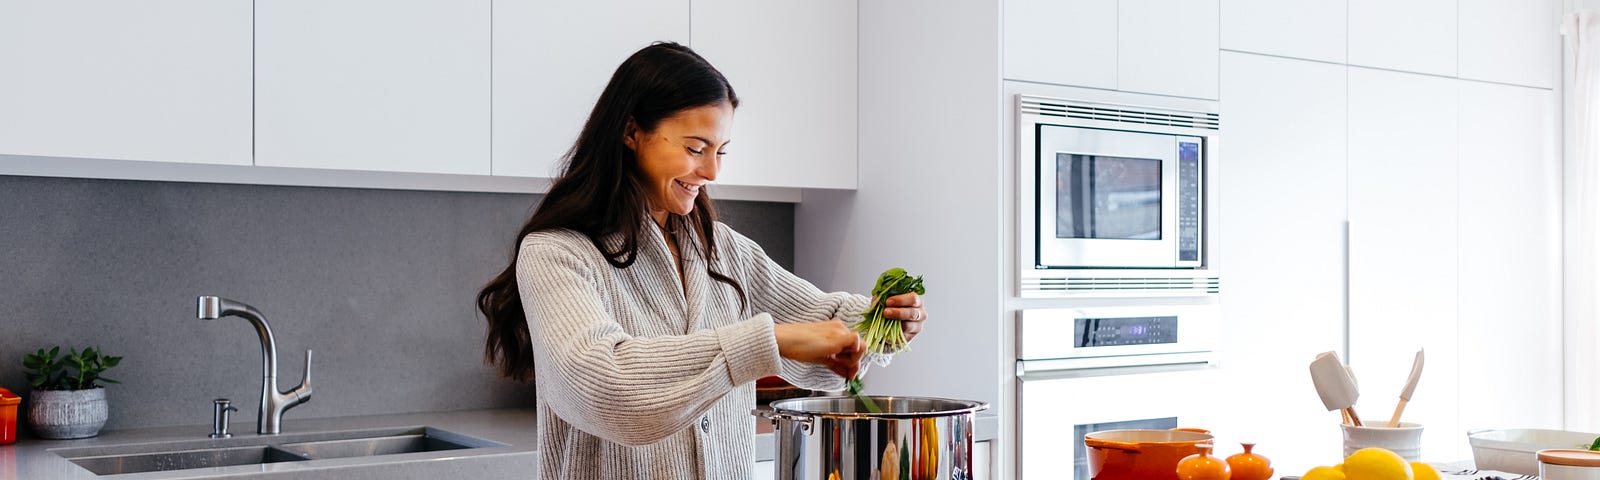 Woman preparing healthy food in a beautiful kitchen